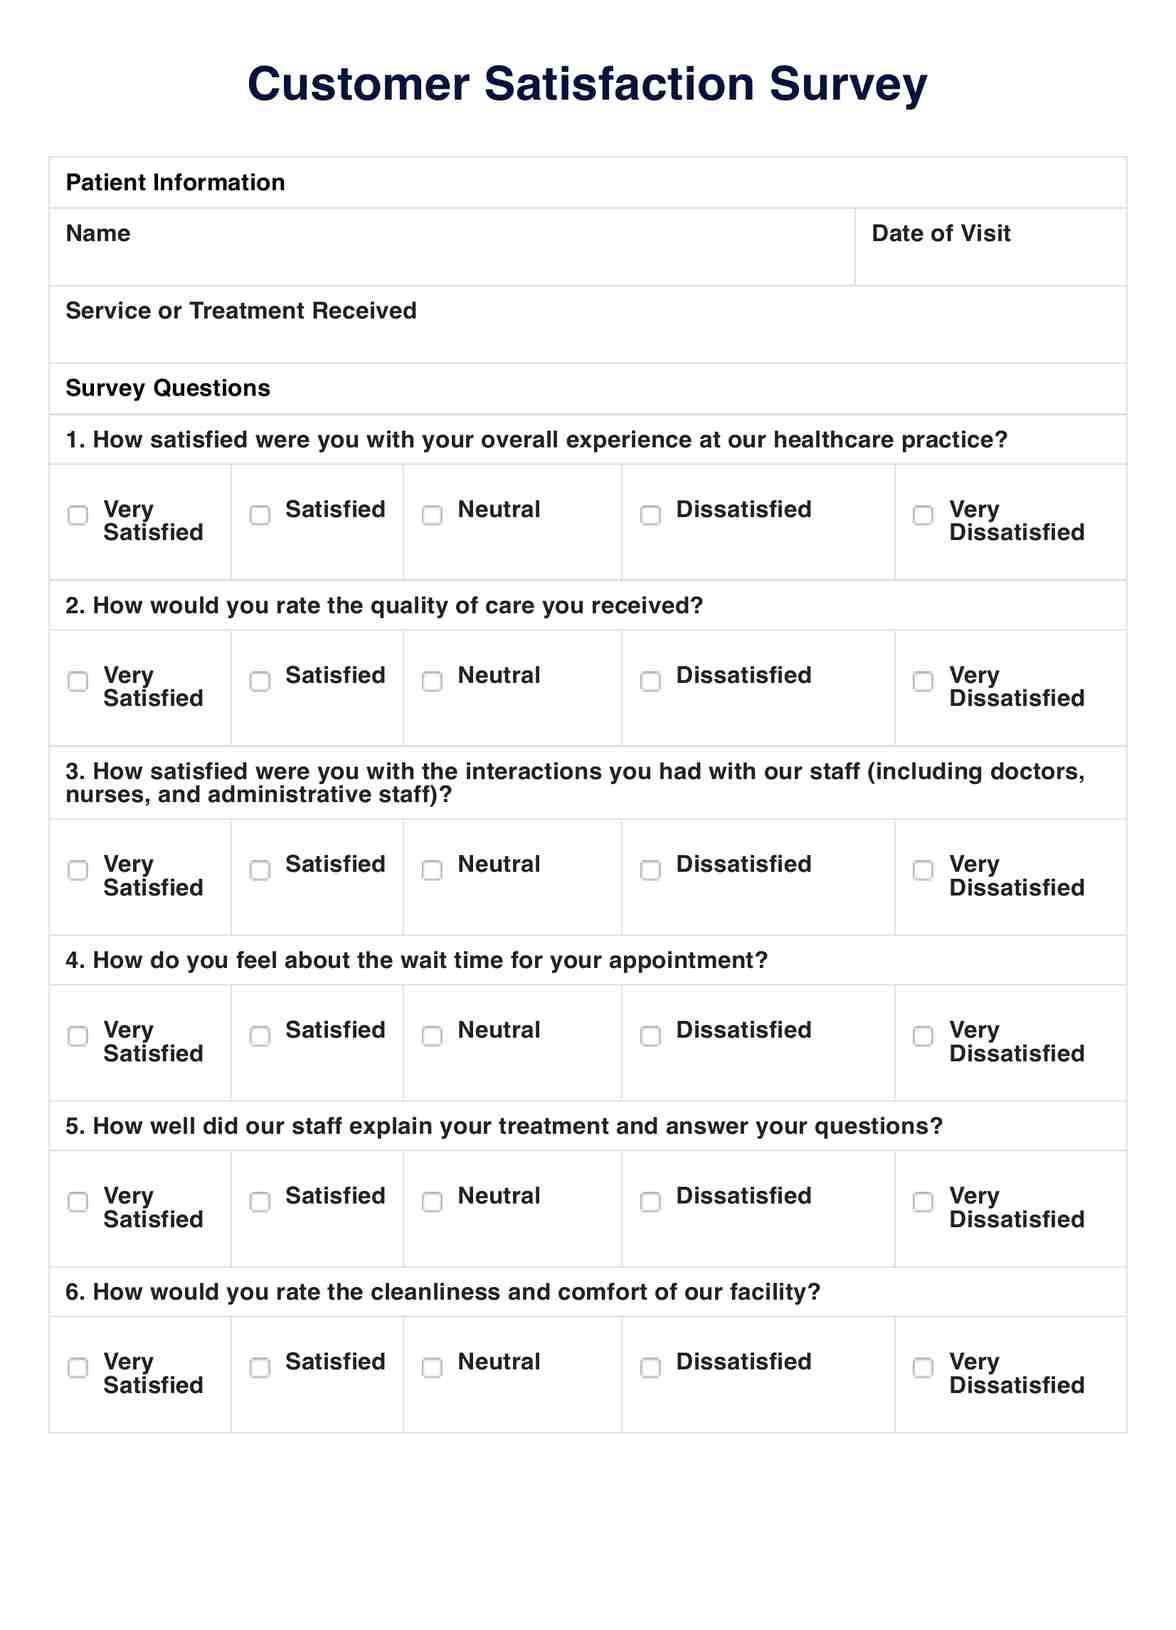 Customer Satisfaction Survey PDF Example